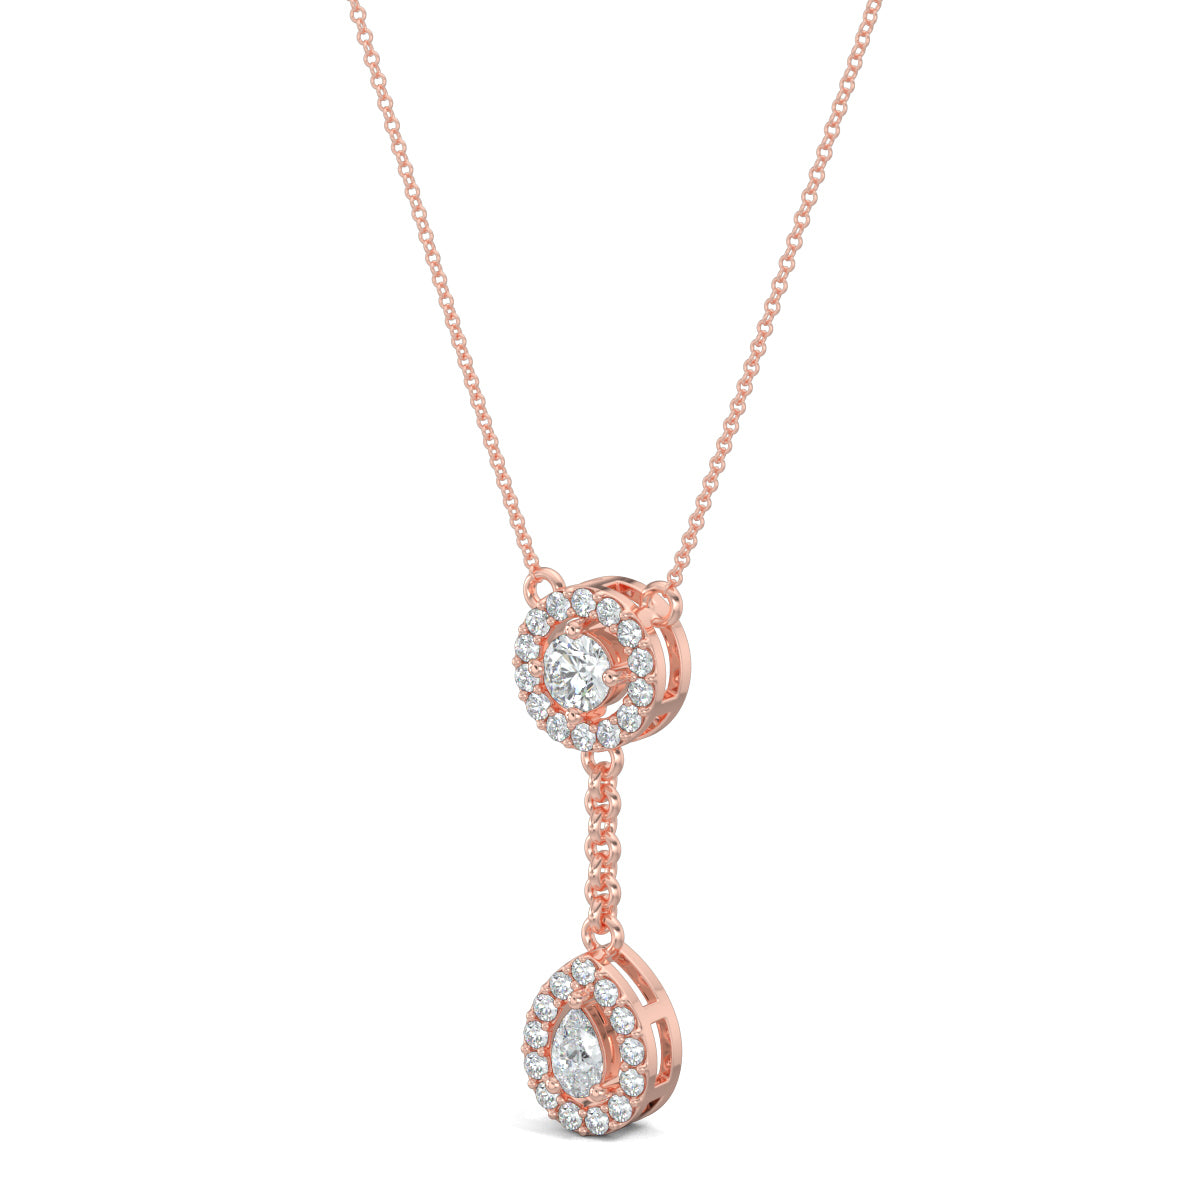 Rose Gold, Diamond Pendants, Natural diamond pendant, Lab-grown diamond pendant, casual pendant, id length pendant, circular border, round diamond, halo setting, drop-shaped border, pear diamond, delicate chain, elegant pendant.